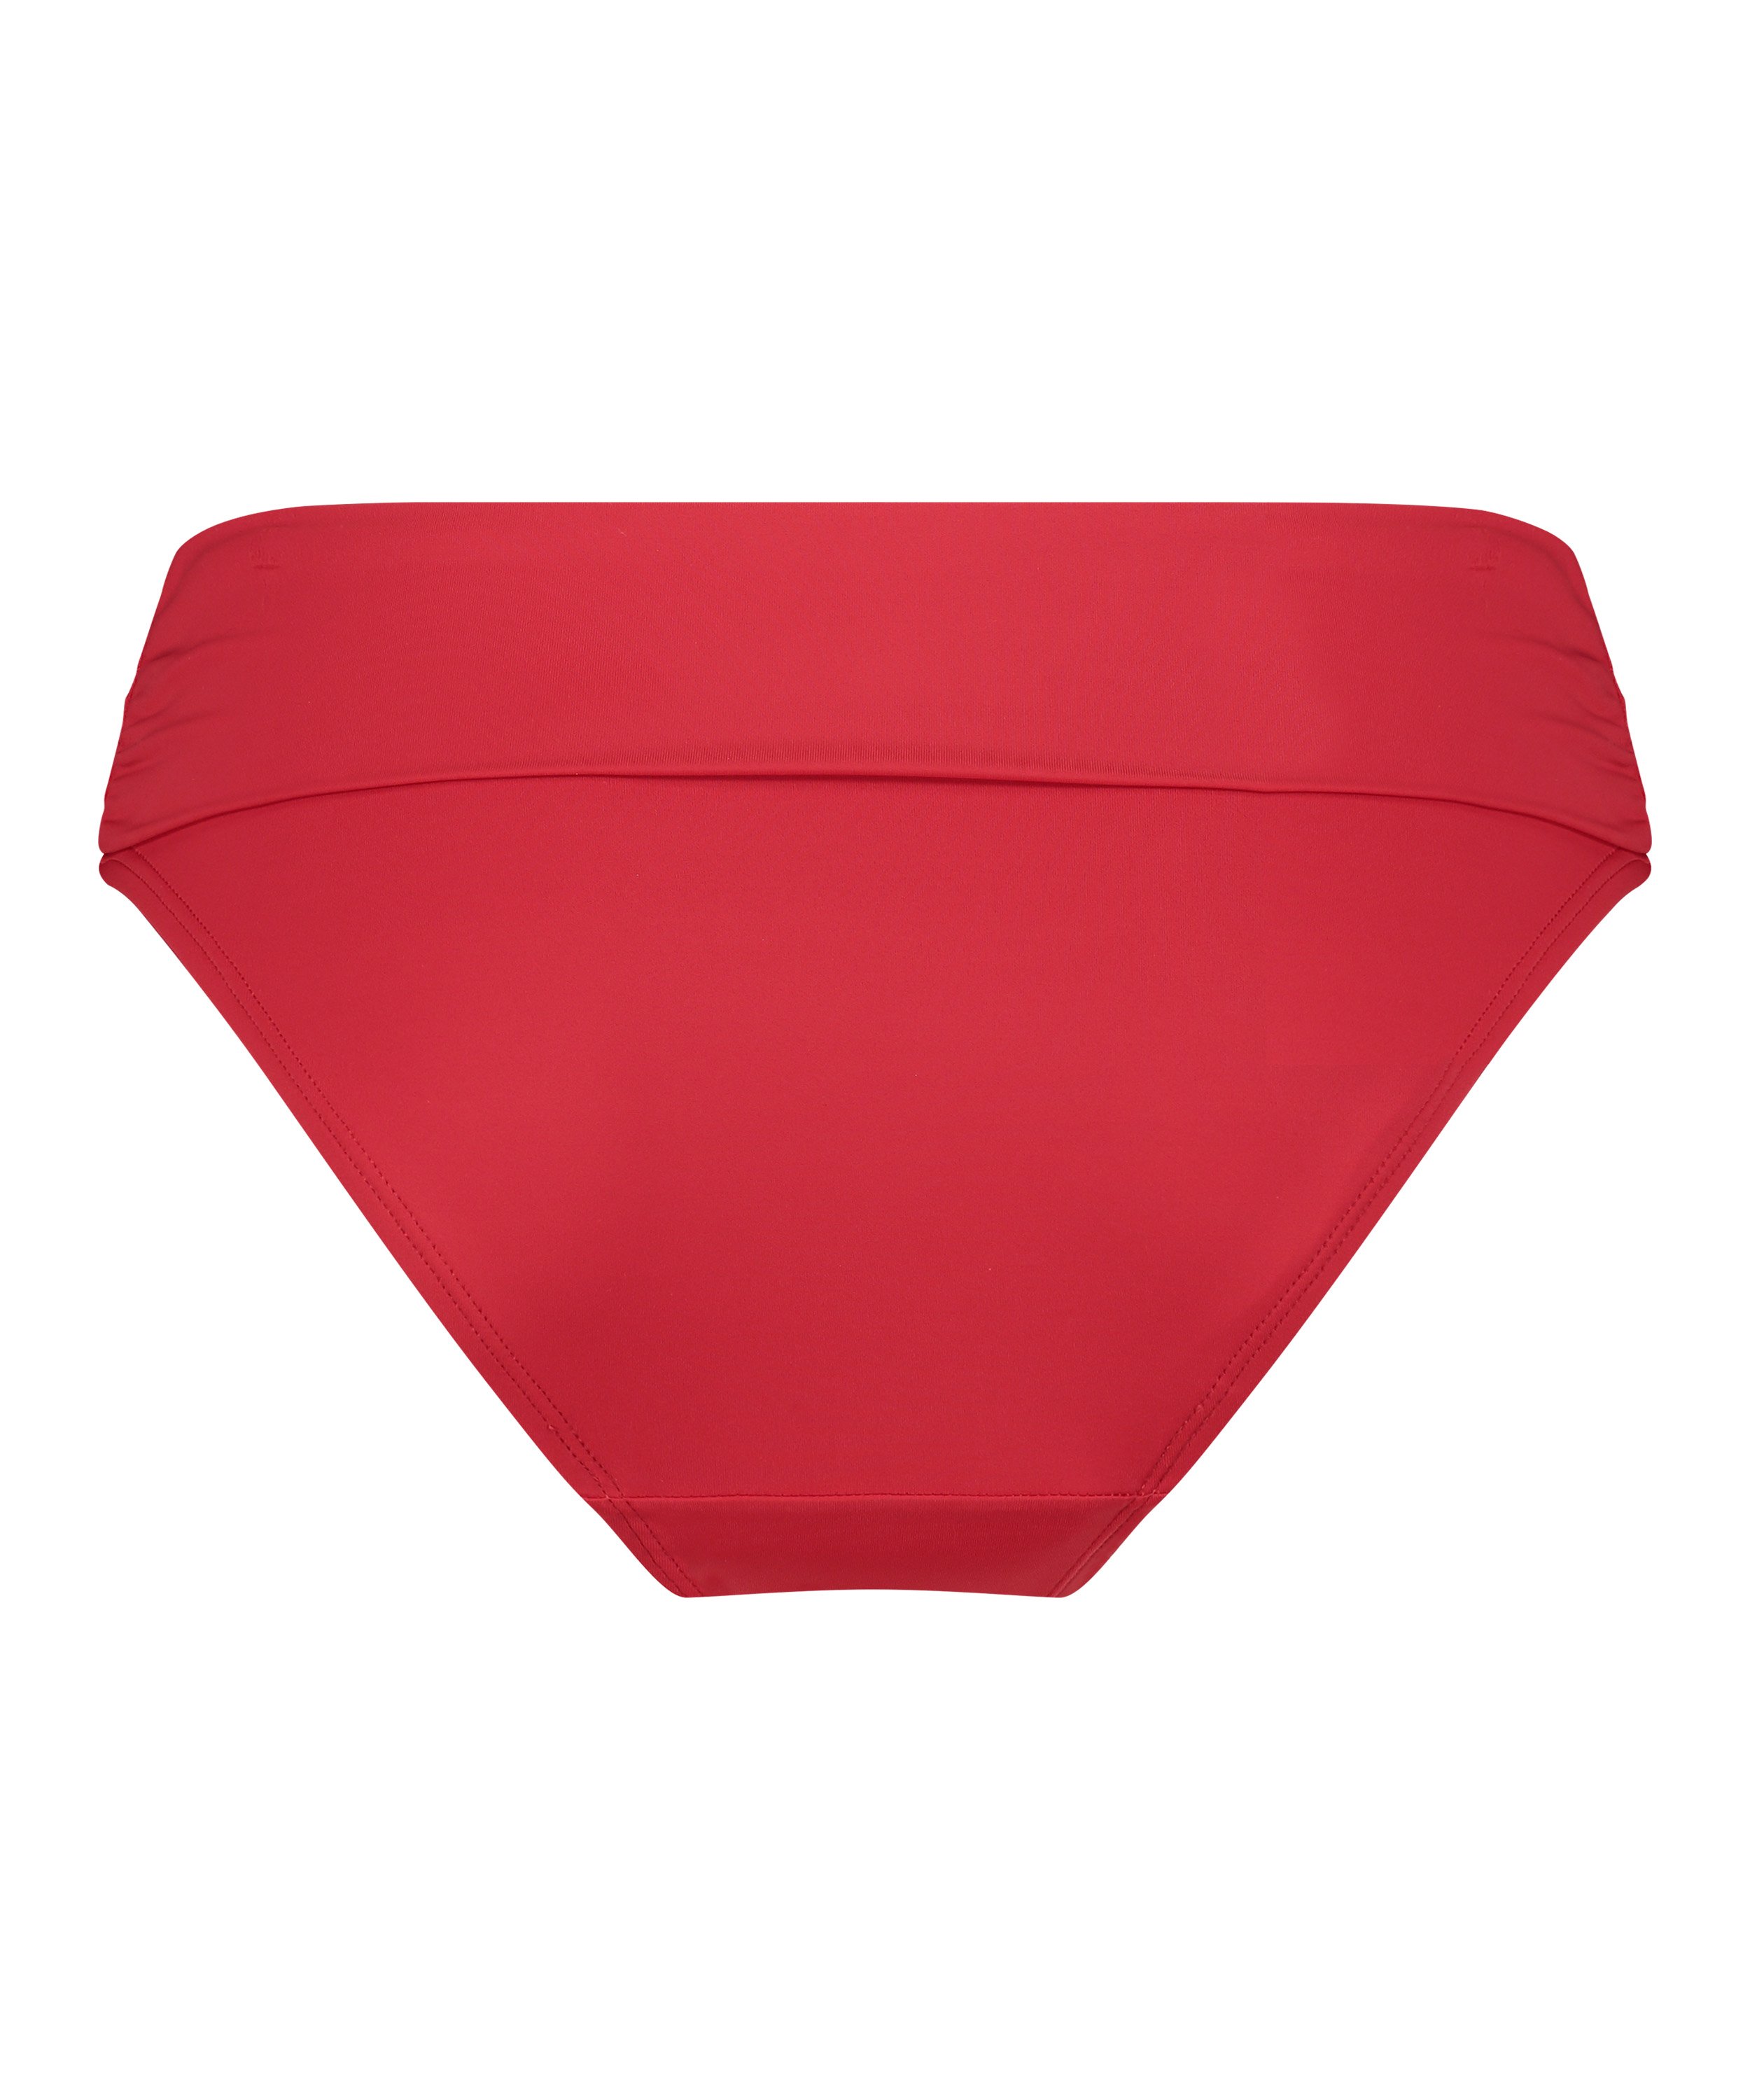 Luxe Rio Bikini Bottoms, Red, main